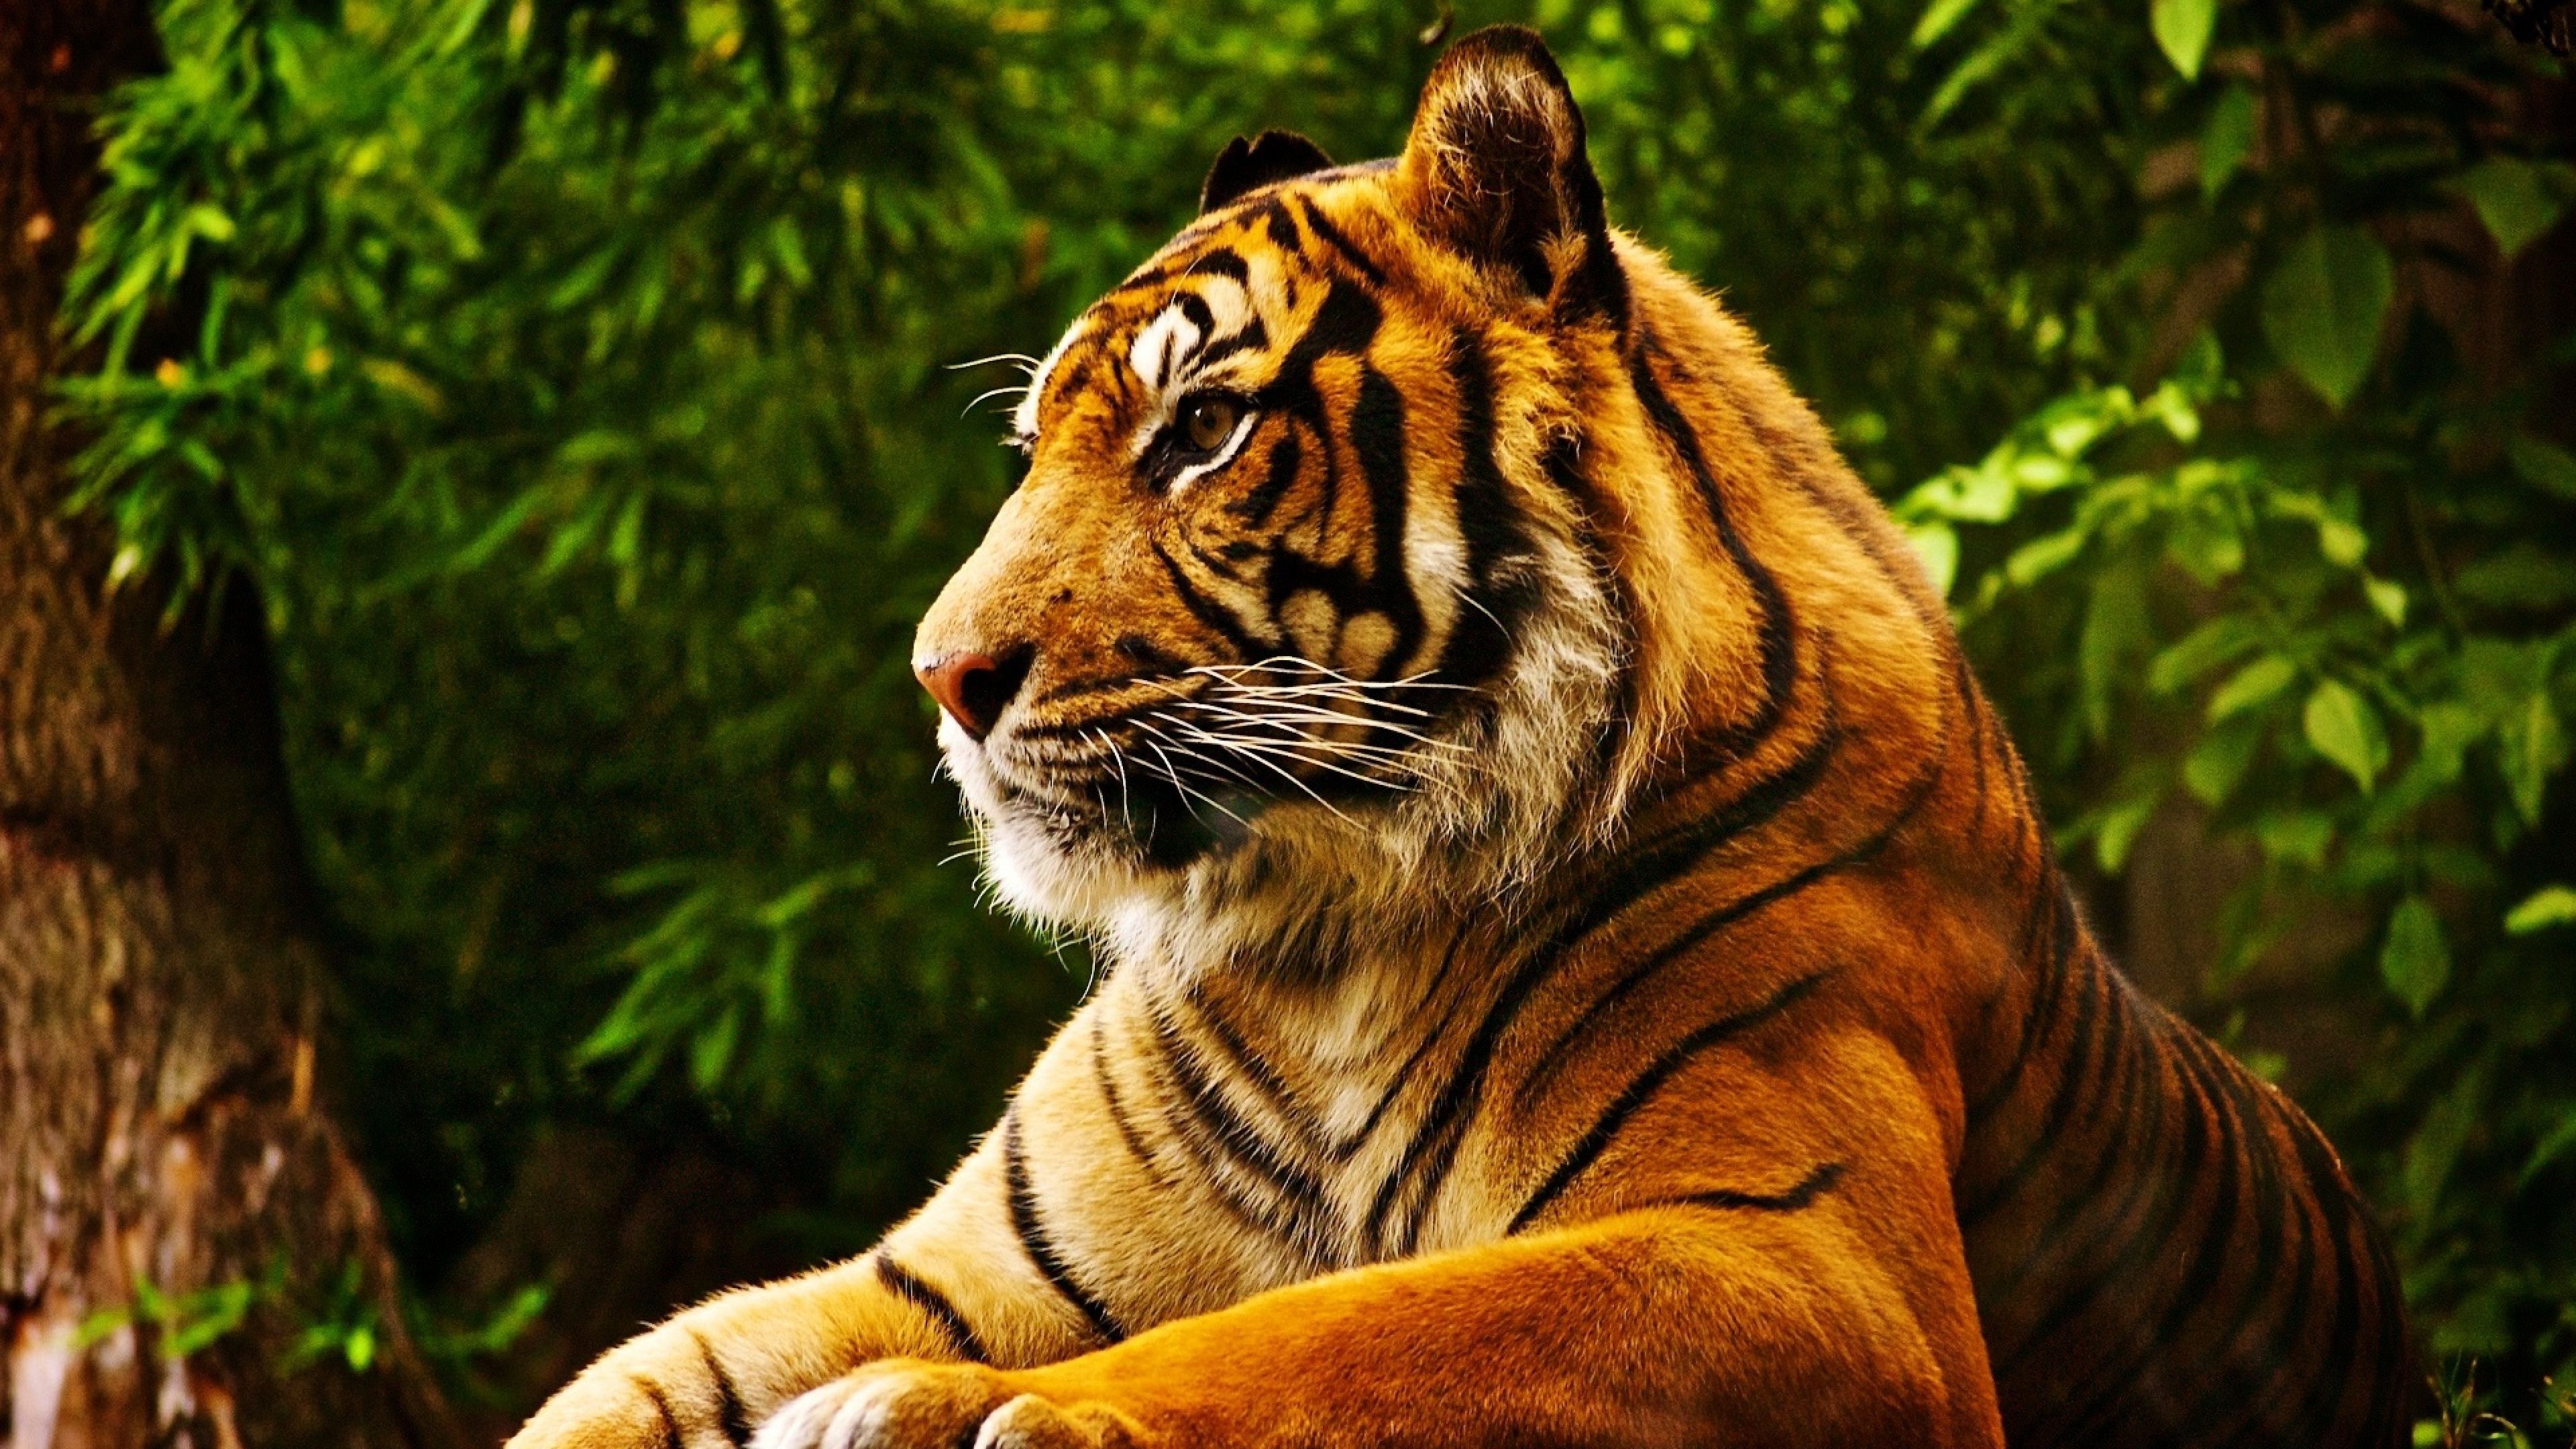 Jungle Animal, Tropical animal wallpapers, Lush and vibrant, Exotic creatures, 3840x2160 4K Desktop